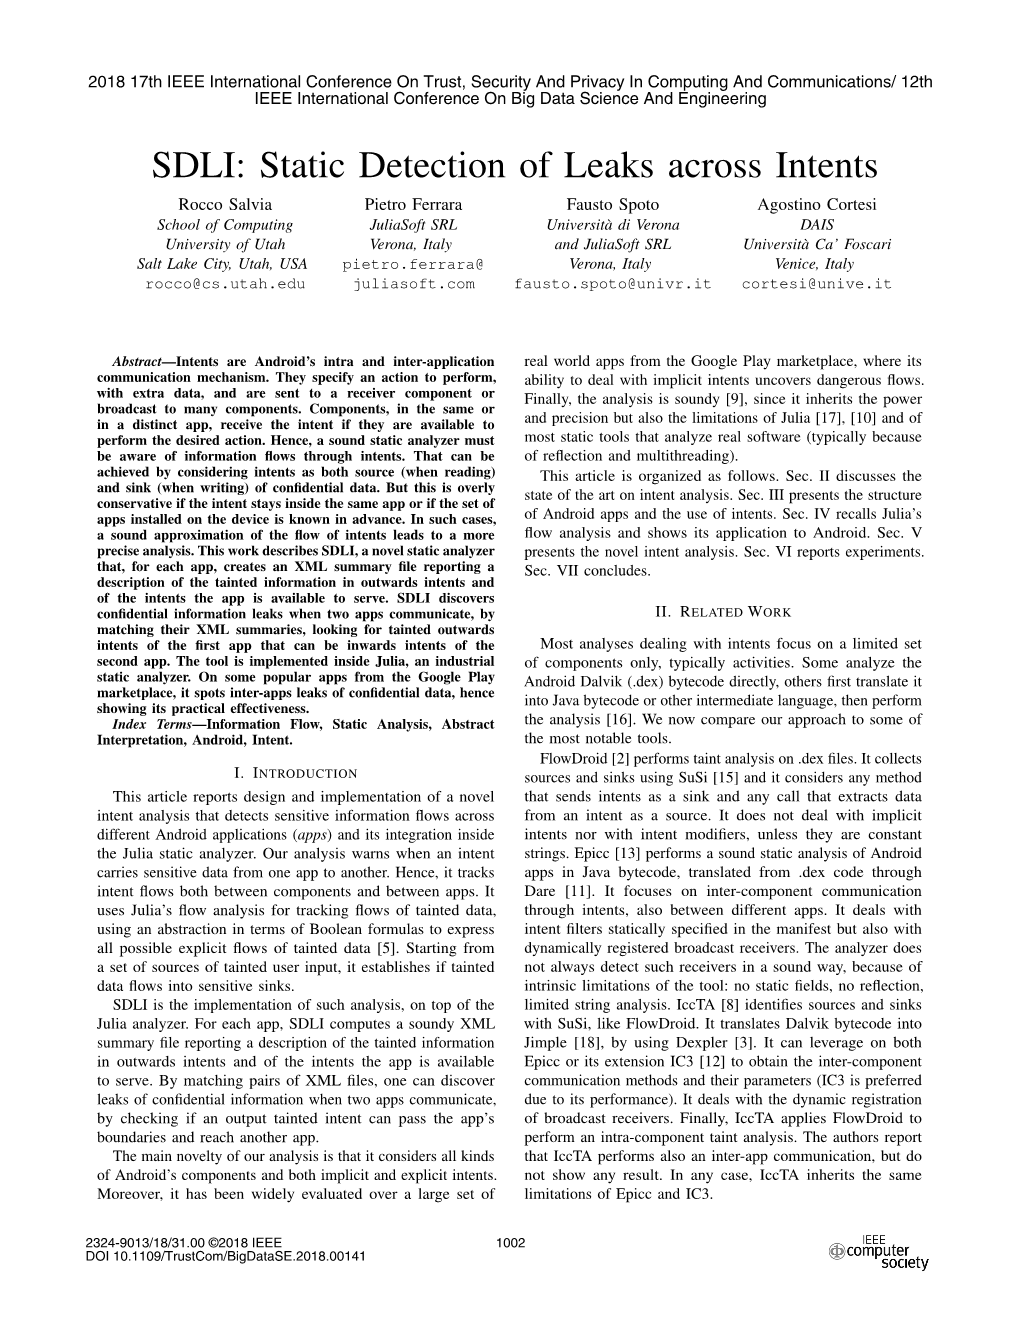 SDLI: Static Detection of Leaks Across Intents